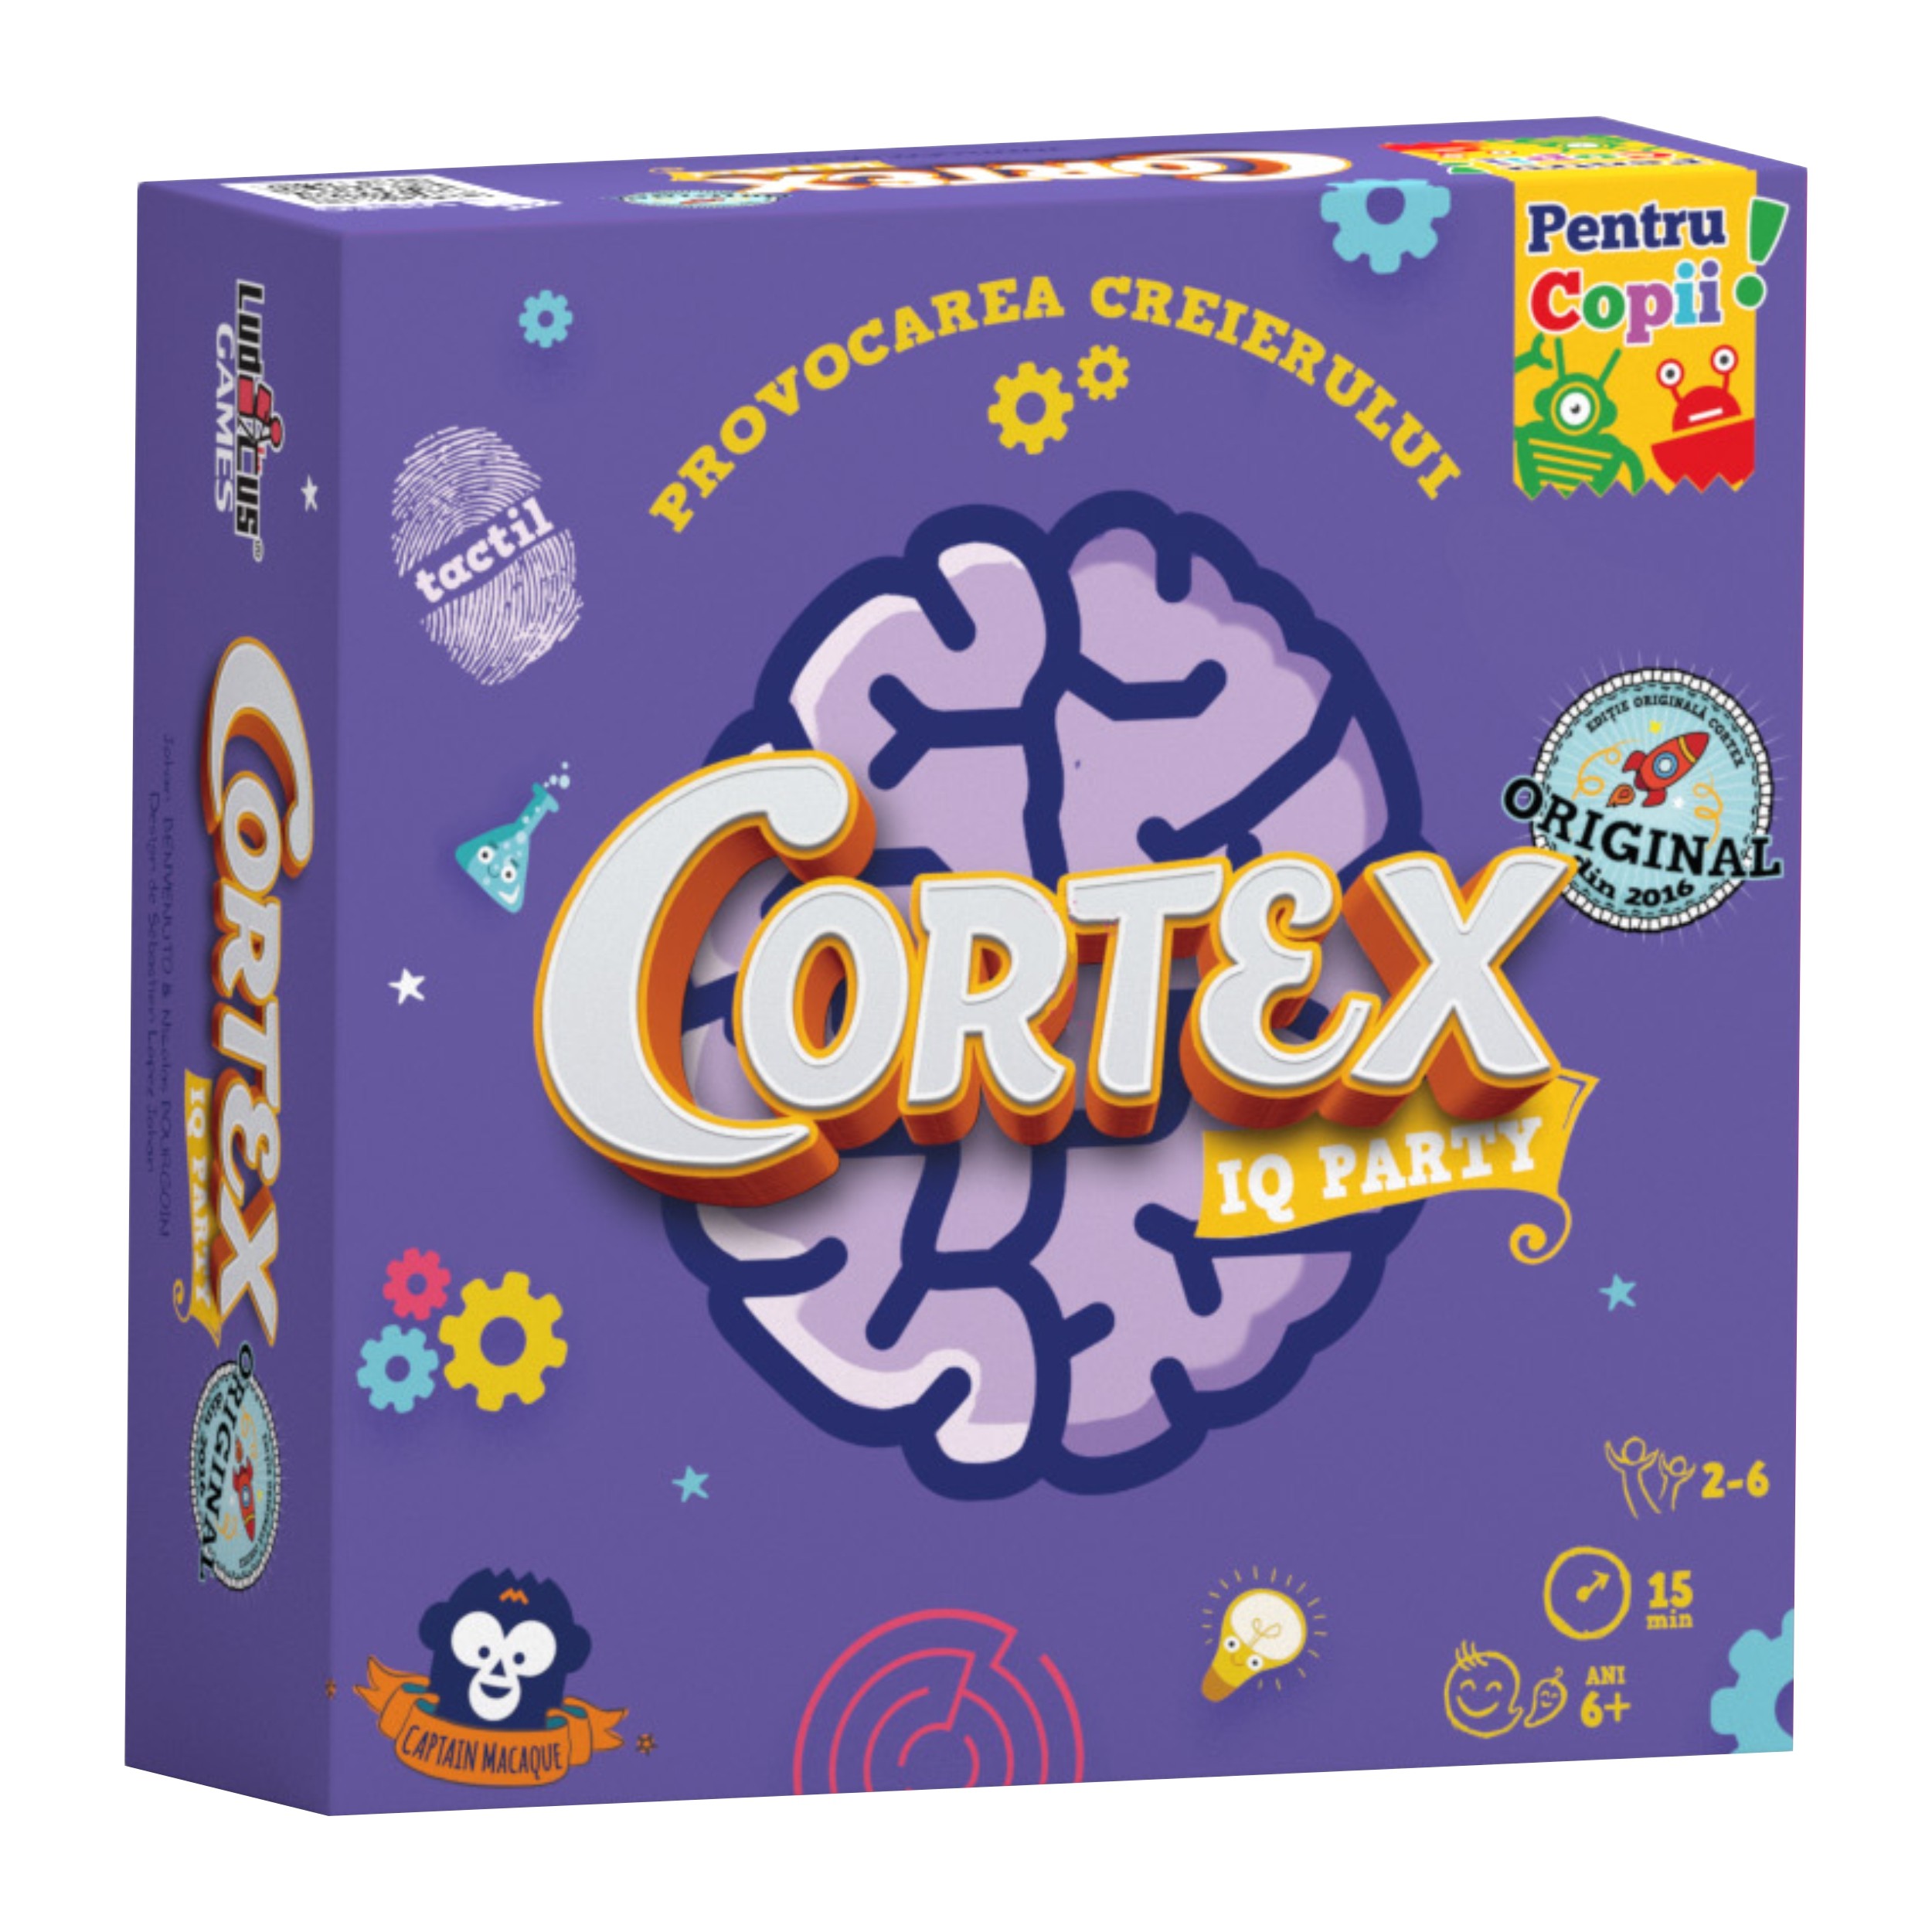 Cortex IQ Party Kids 1 | Ludicus